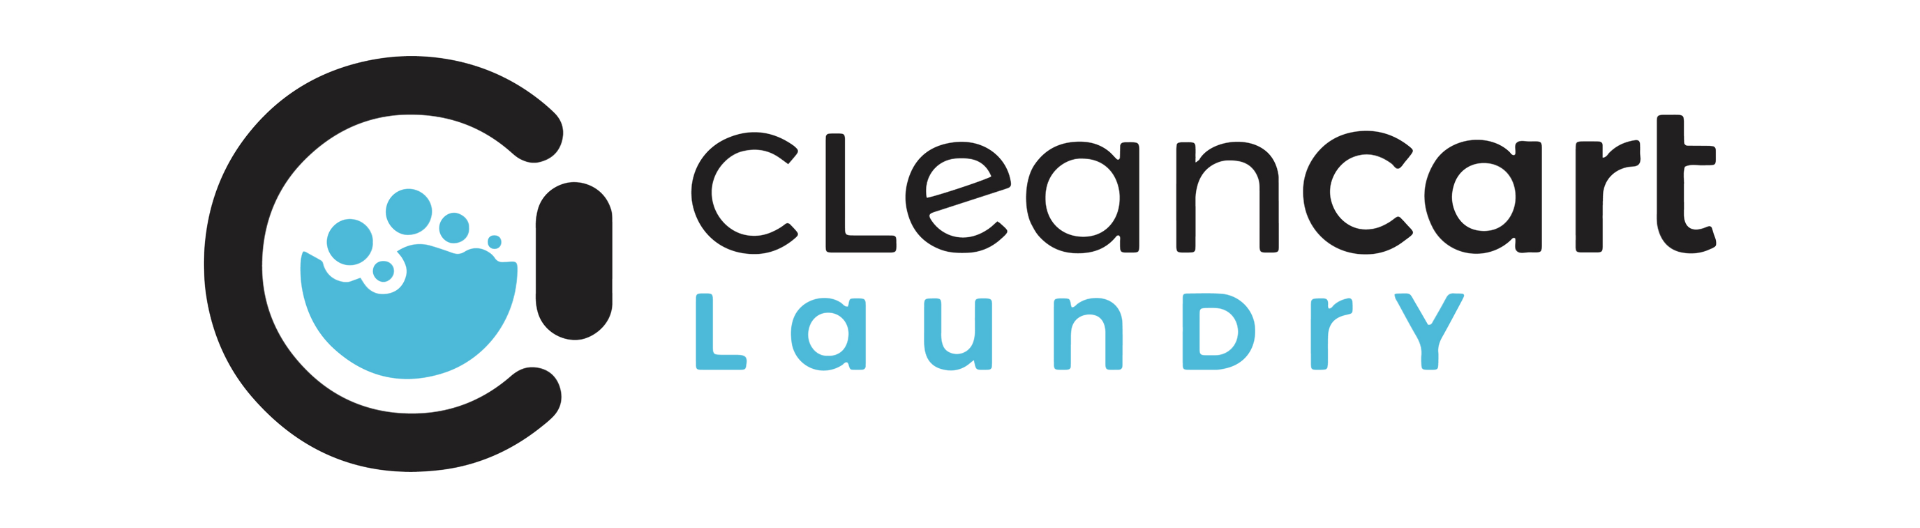 cleancart laundry